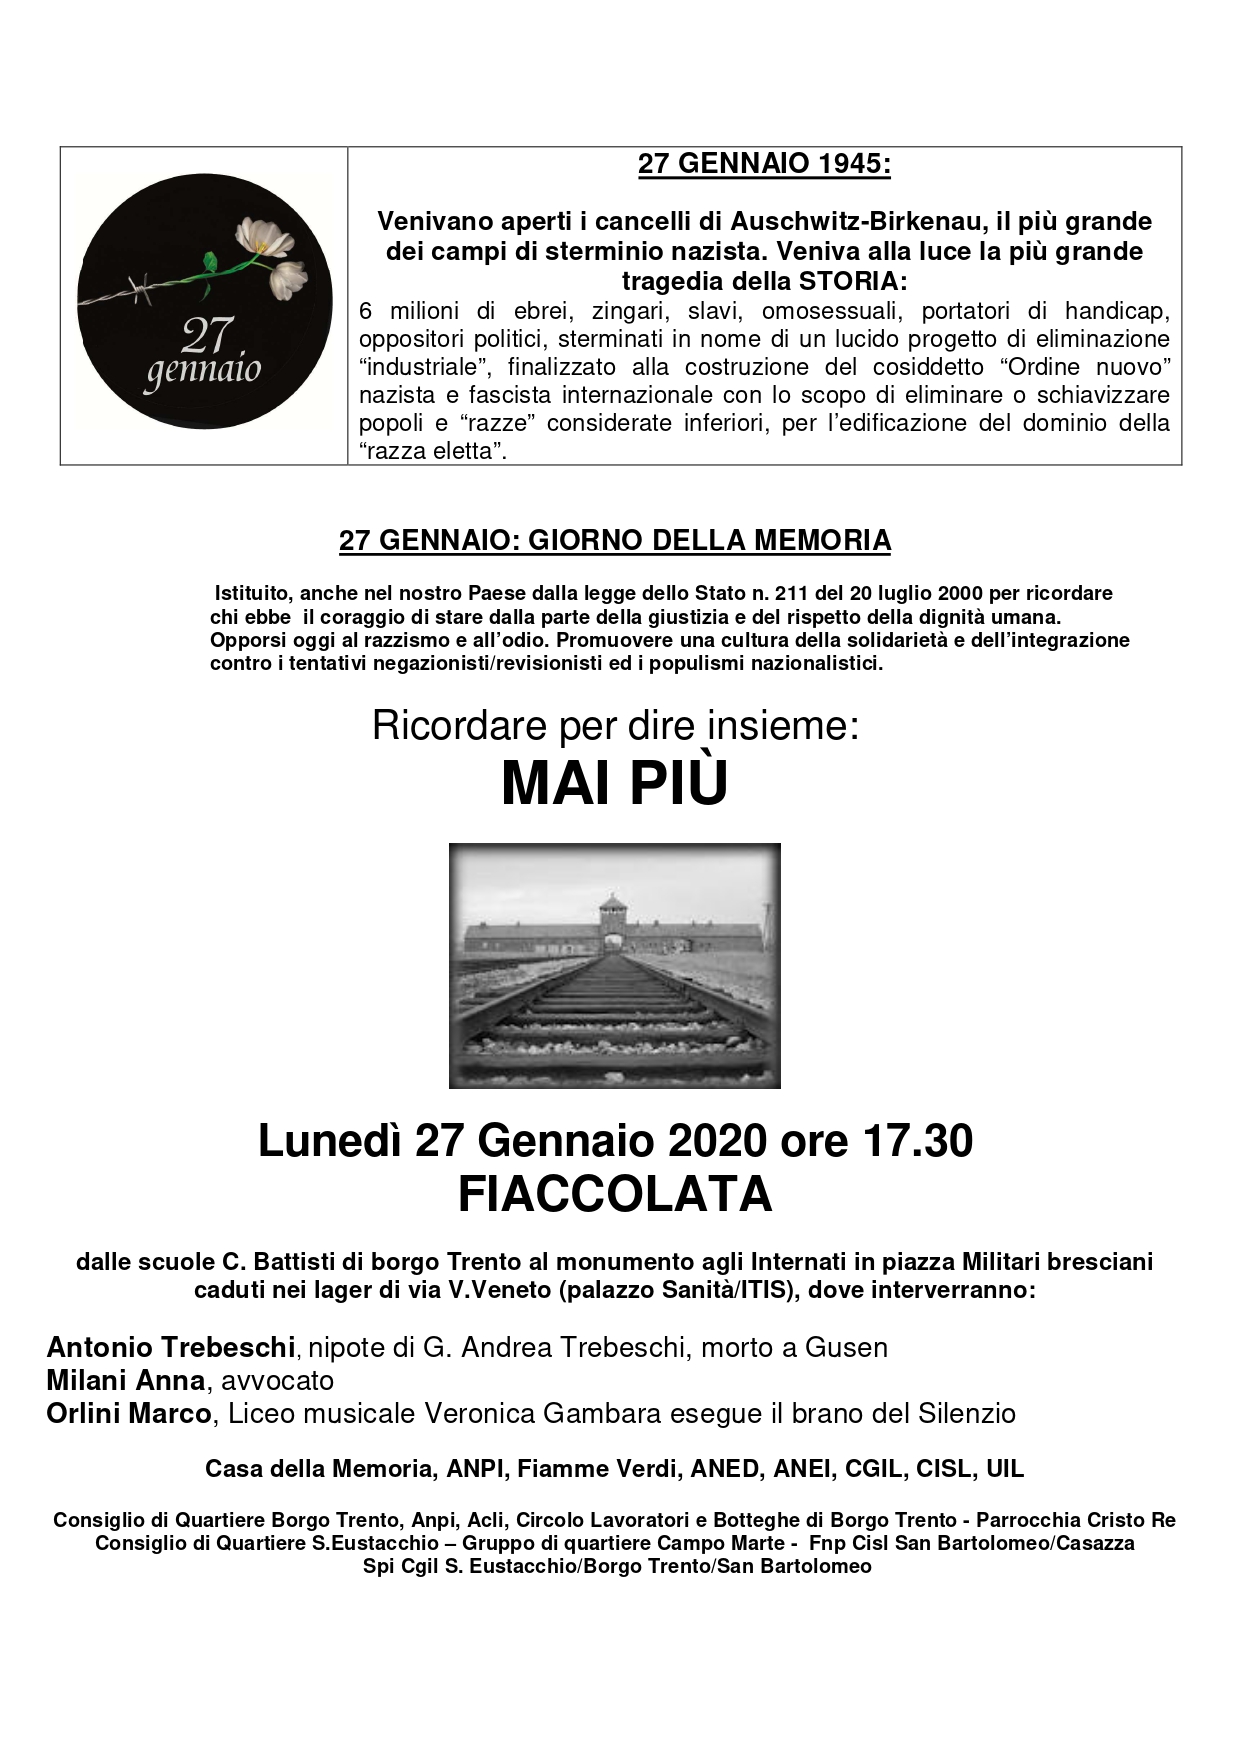 Fiaccolata 27.1.20_page-0001